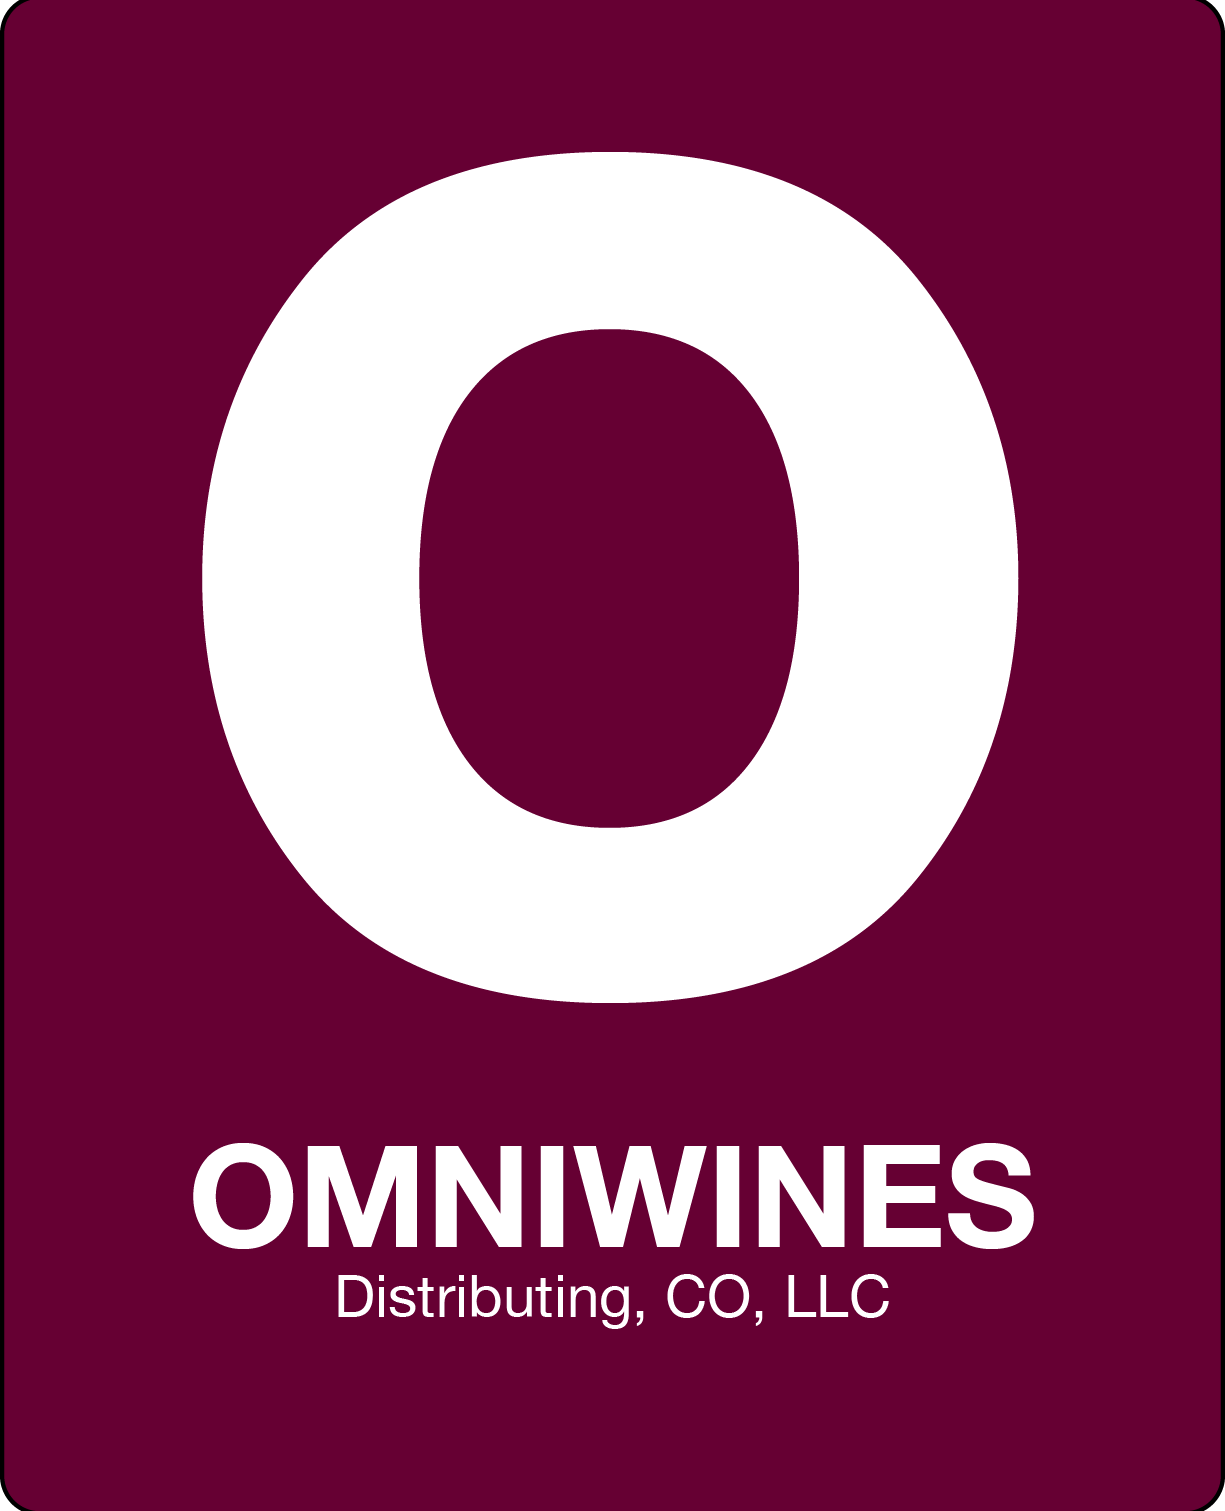 Omniwines Distributing Co